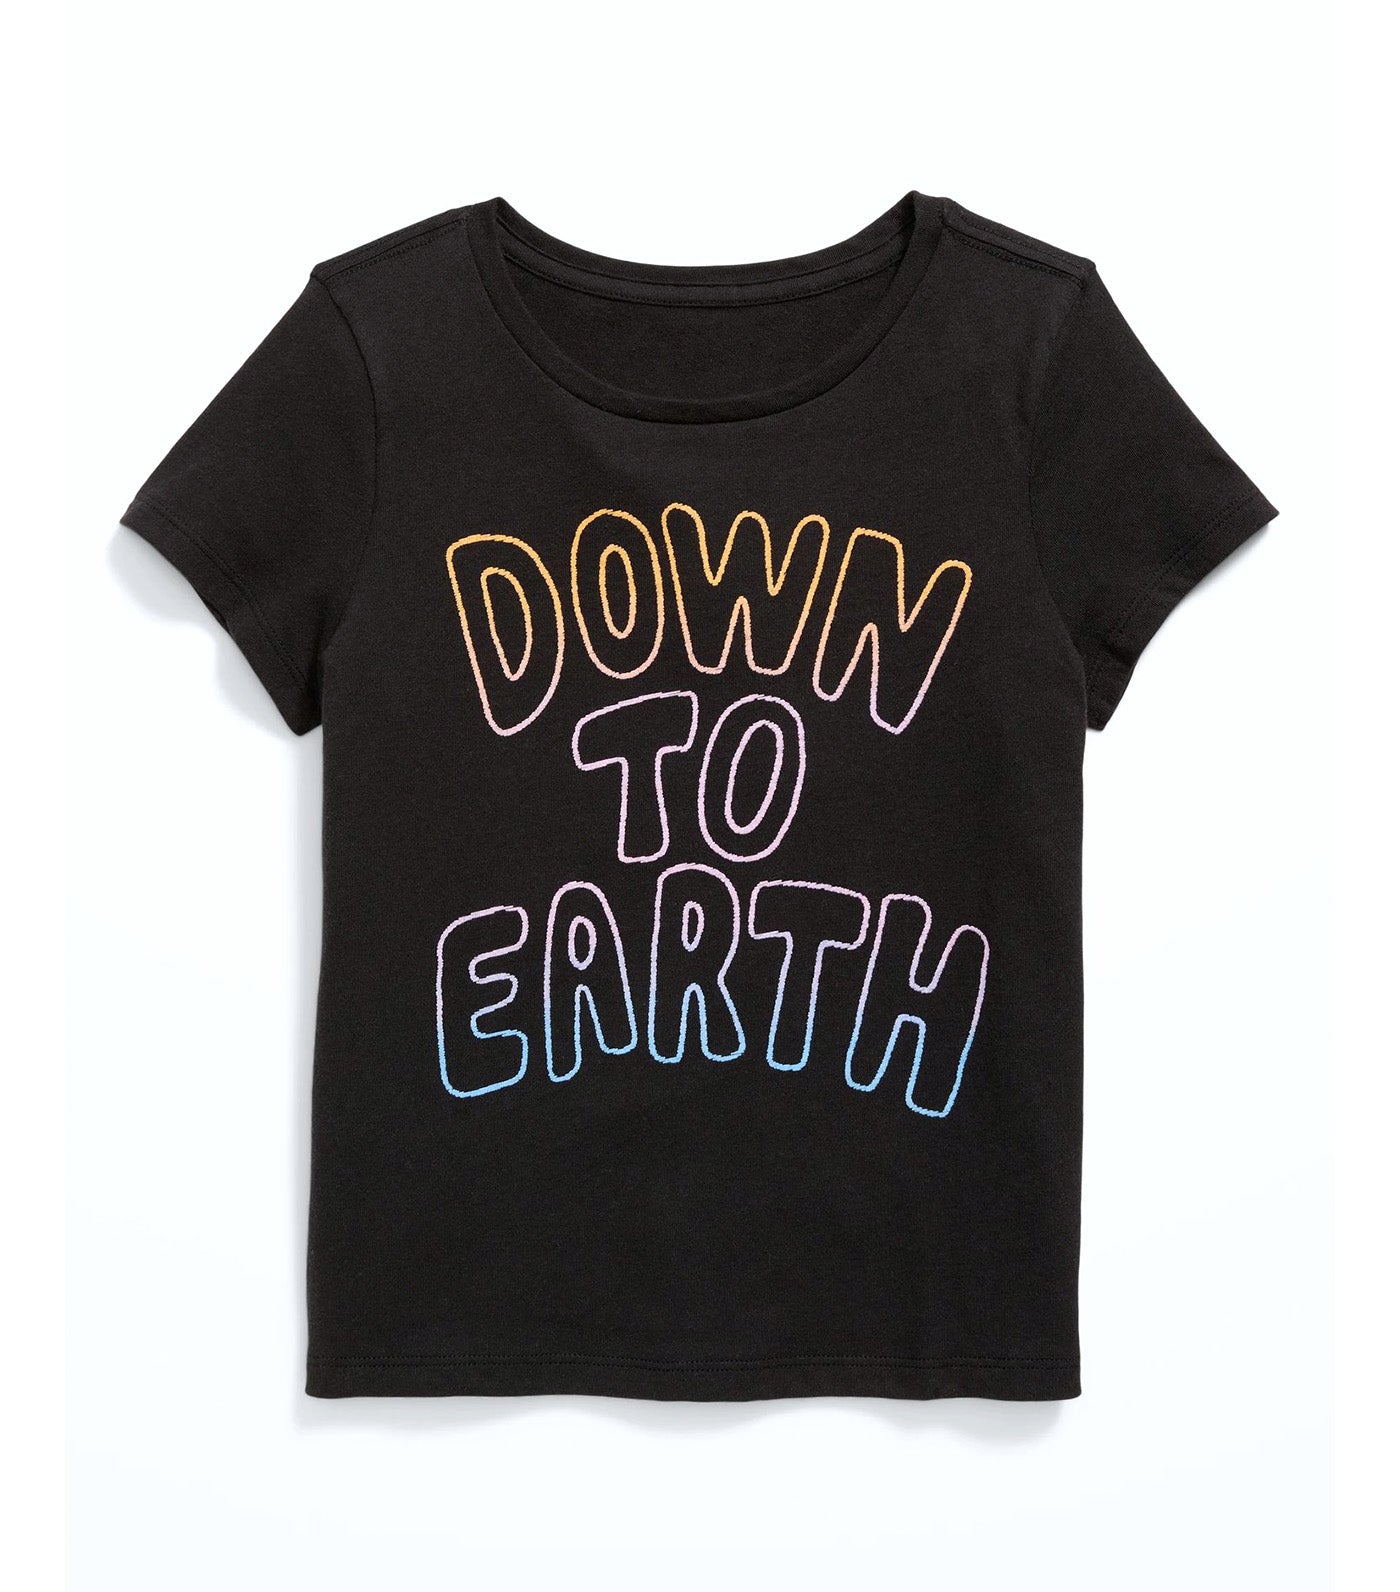 Short-Sleeve Graphic T-Shirt for Girls - Black Jack